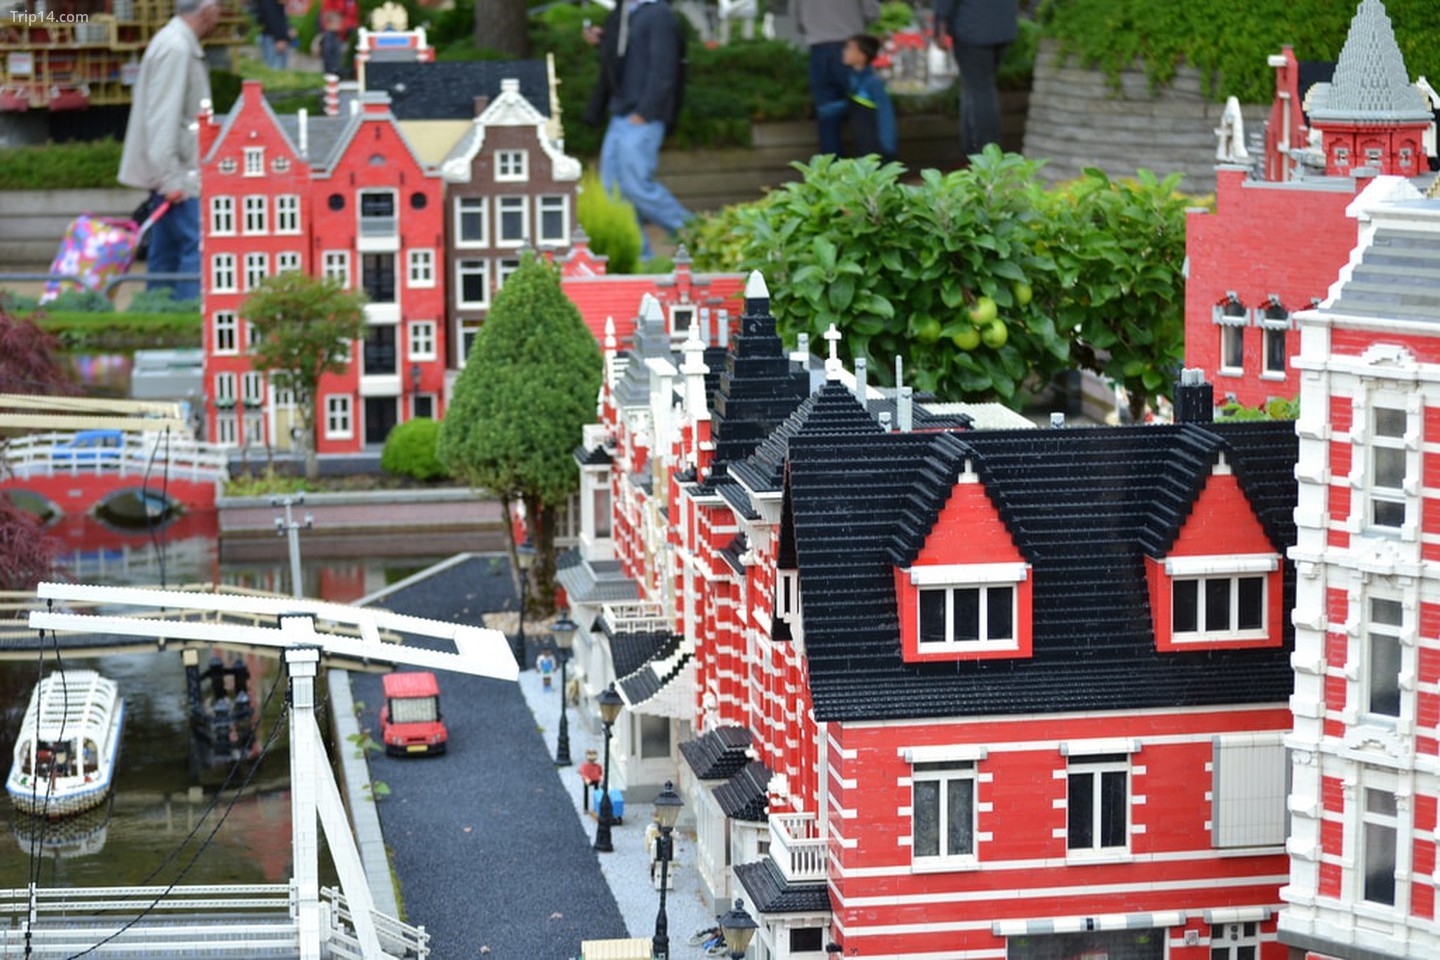  Legoland, Billund   |   